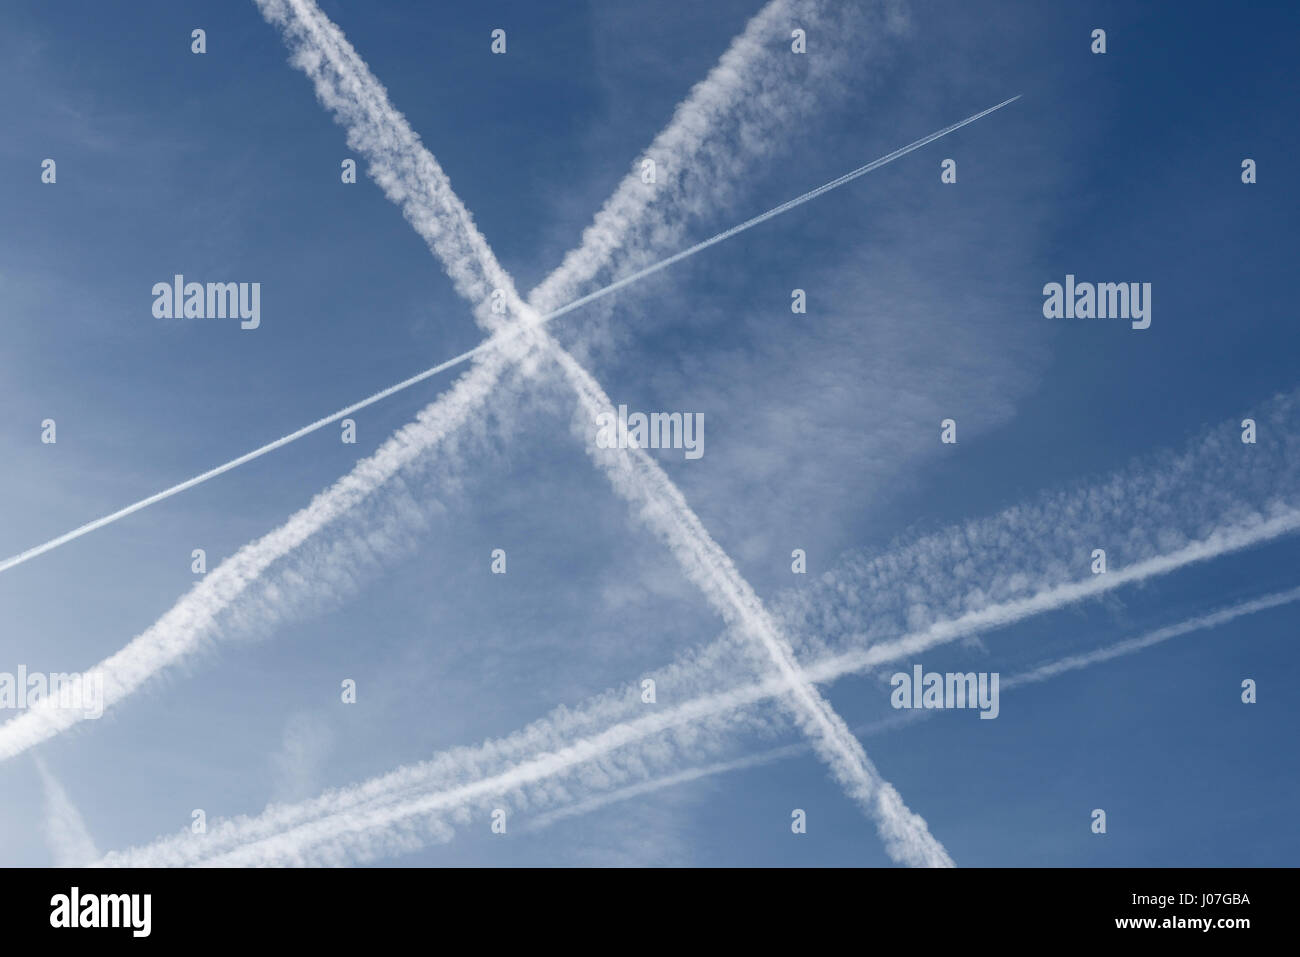 Airplane vapour trails across a deep blue sky Stock Photo